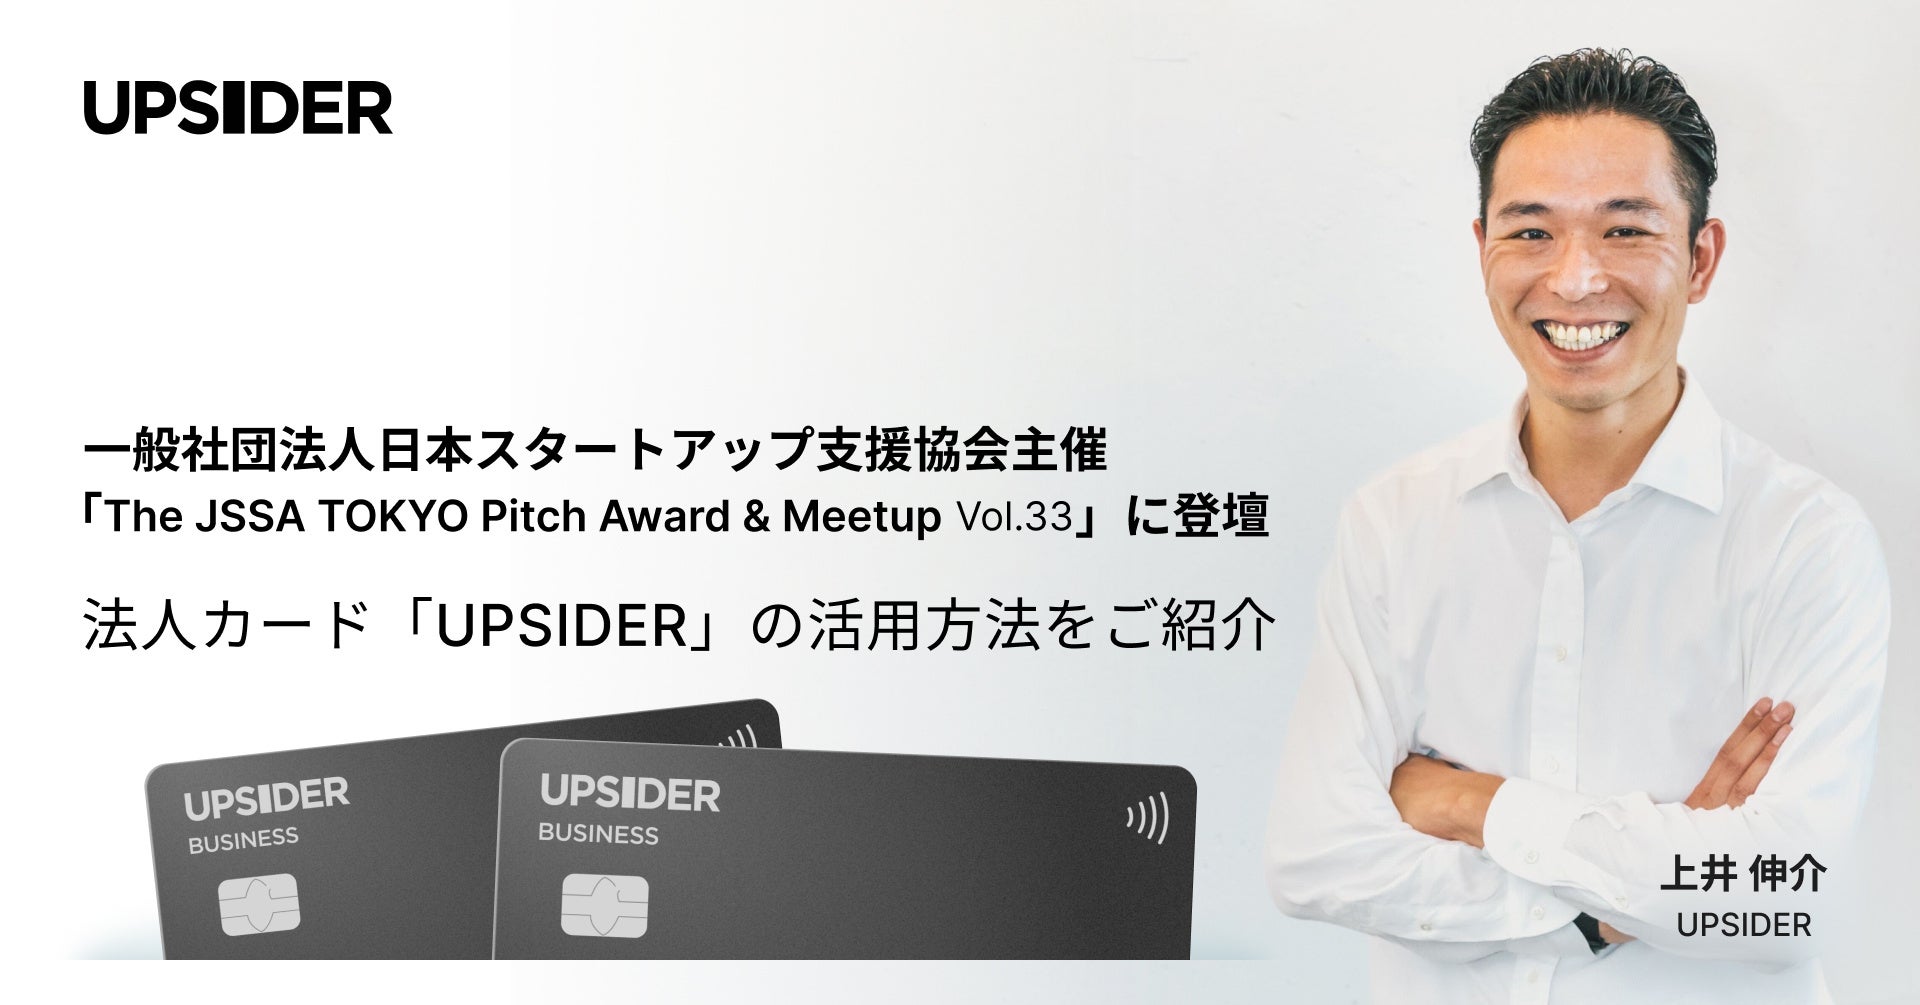 UPSIDER、一般社団法人日本スタートアップ支援協会主催「The JSSA TOKYO Pitch Award & Meetup Vol.33」に登壇